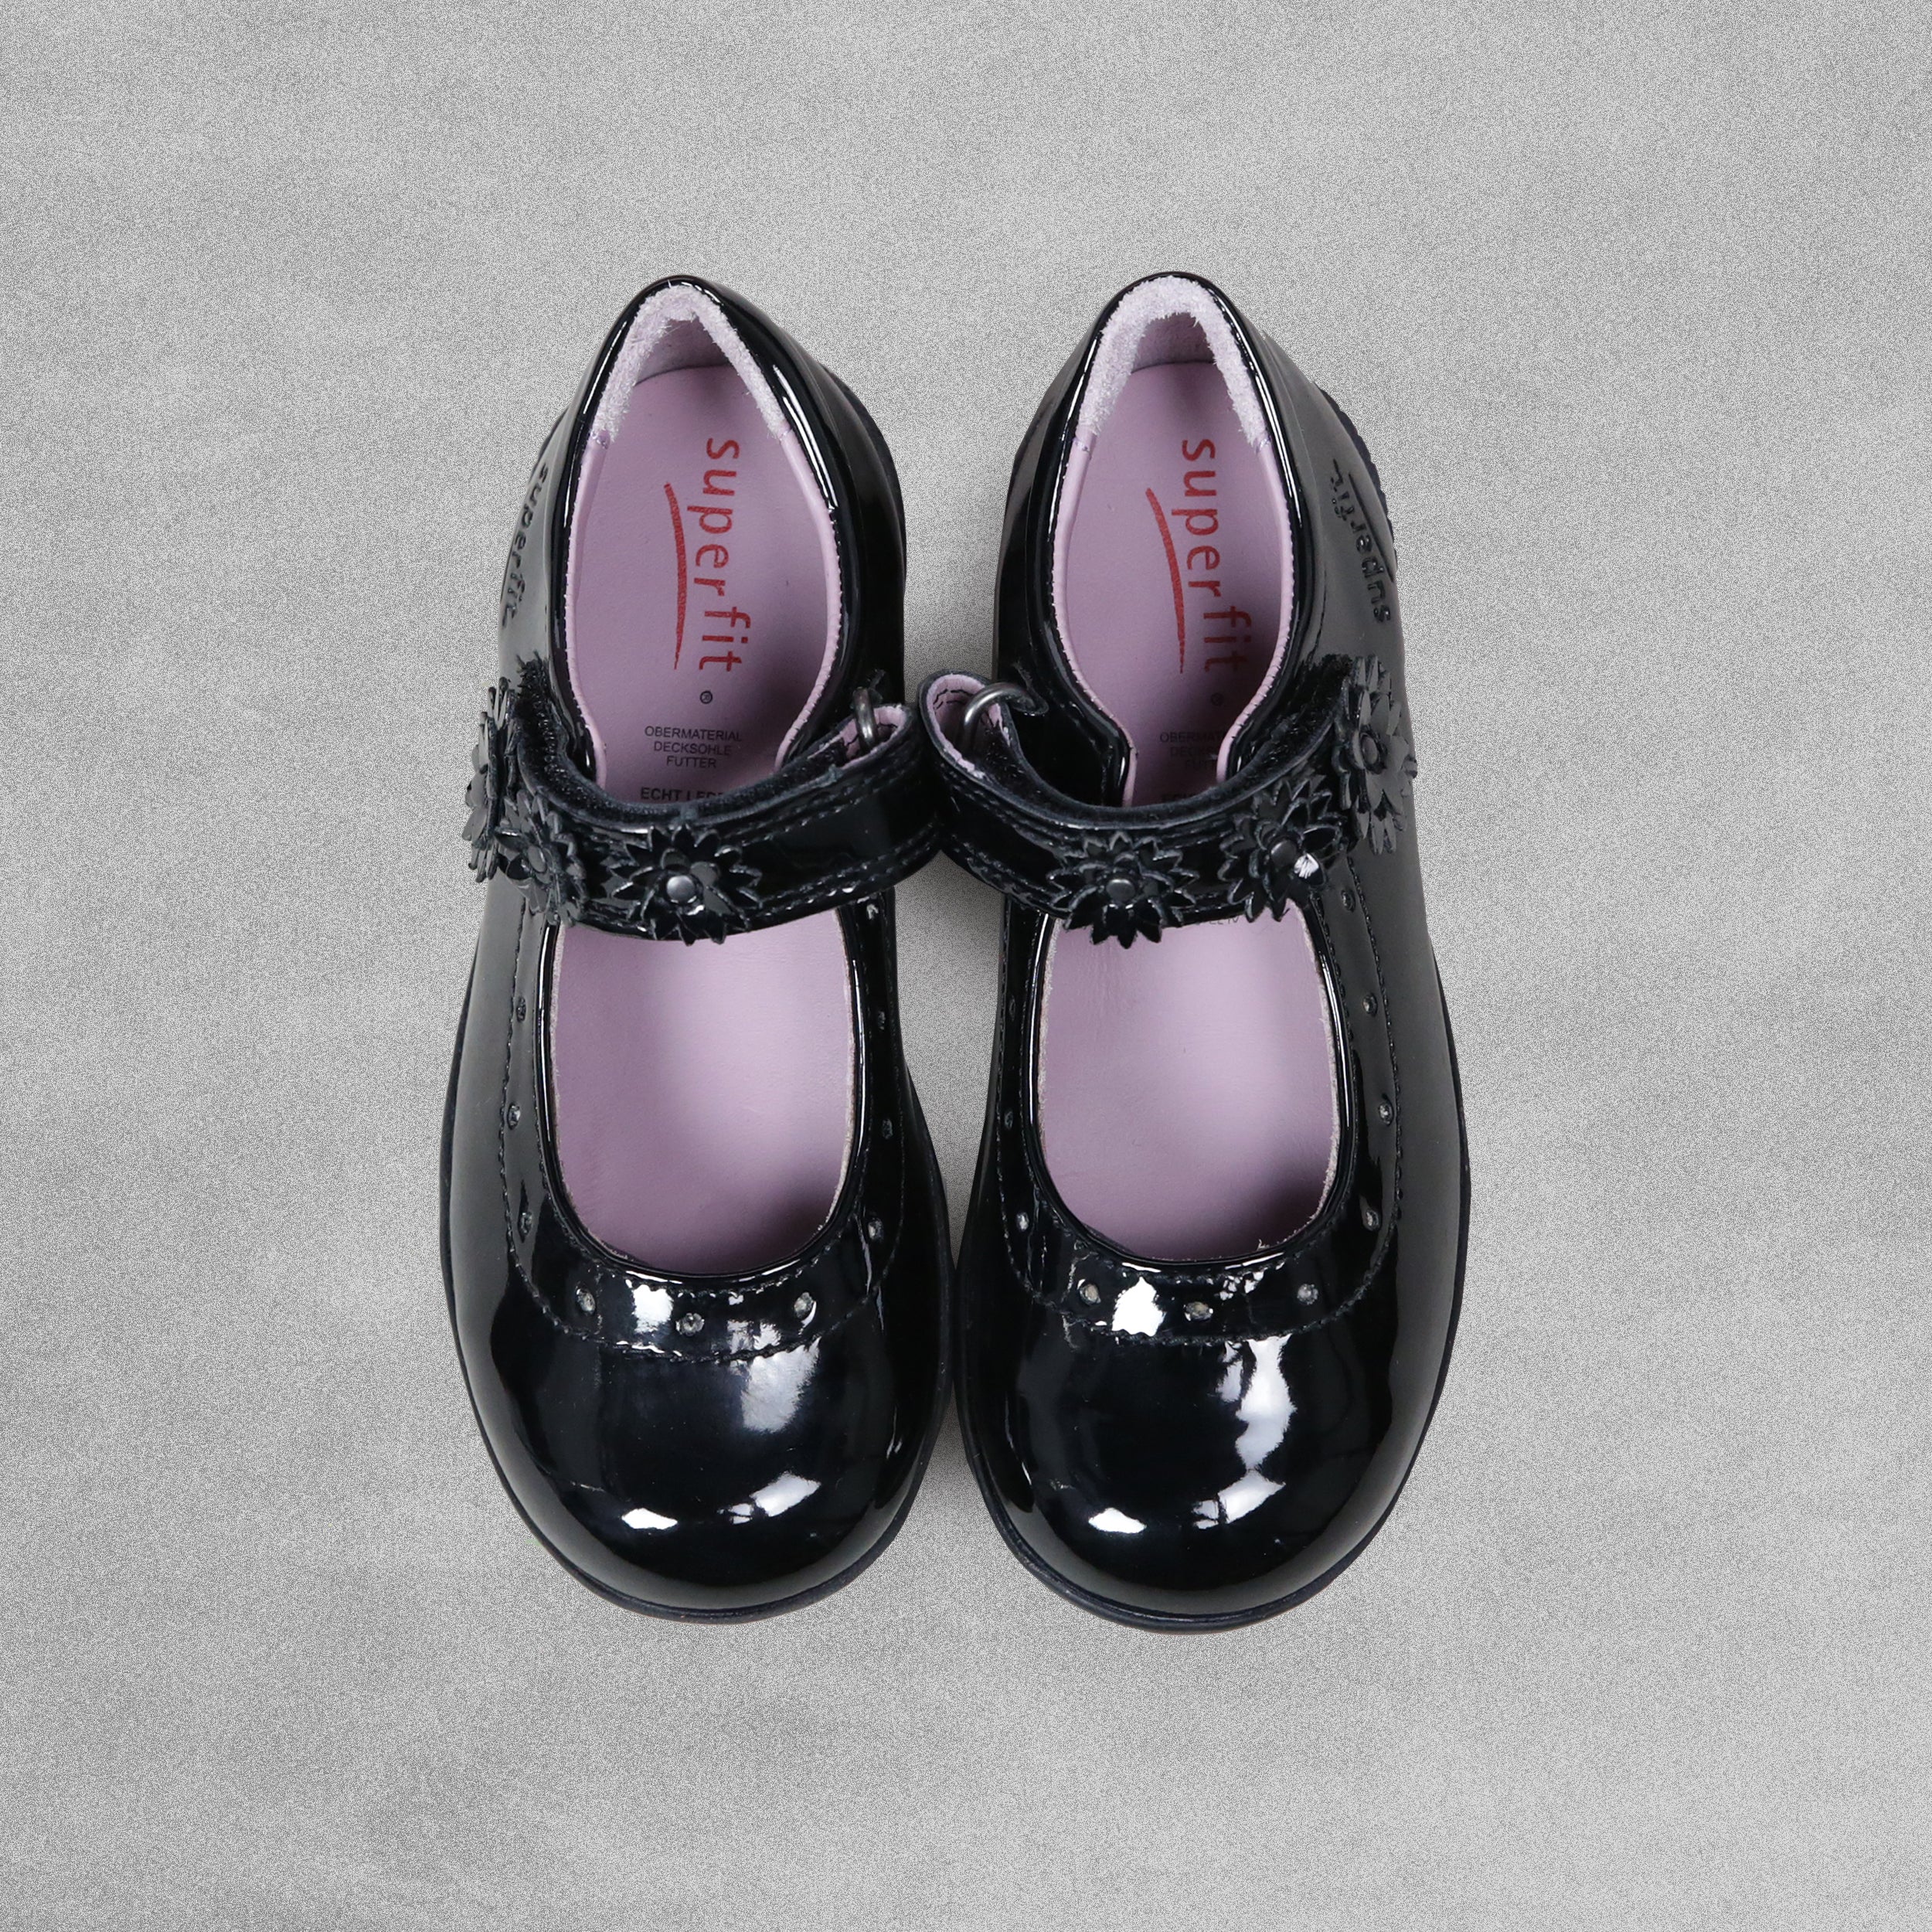 Superfit Kids Girls Black Patent Leather Shoes - UK Child Size 8 / EU 25